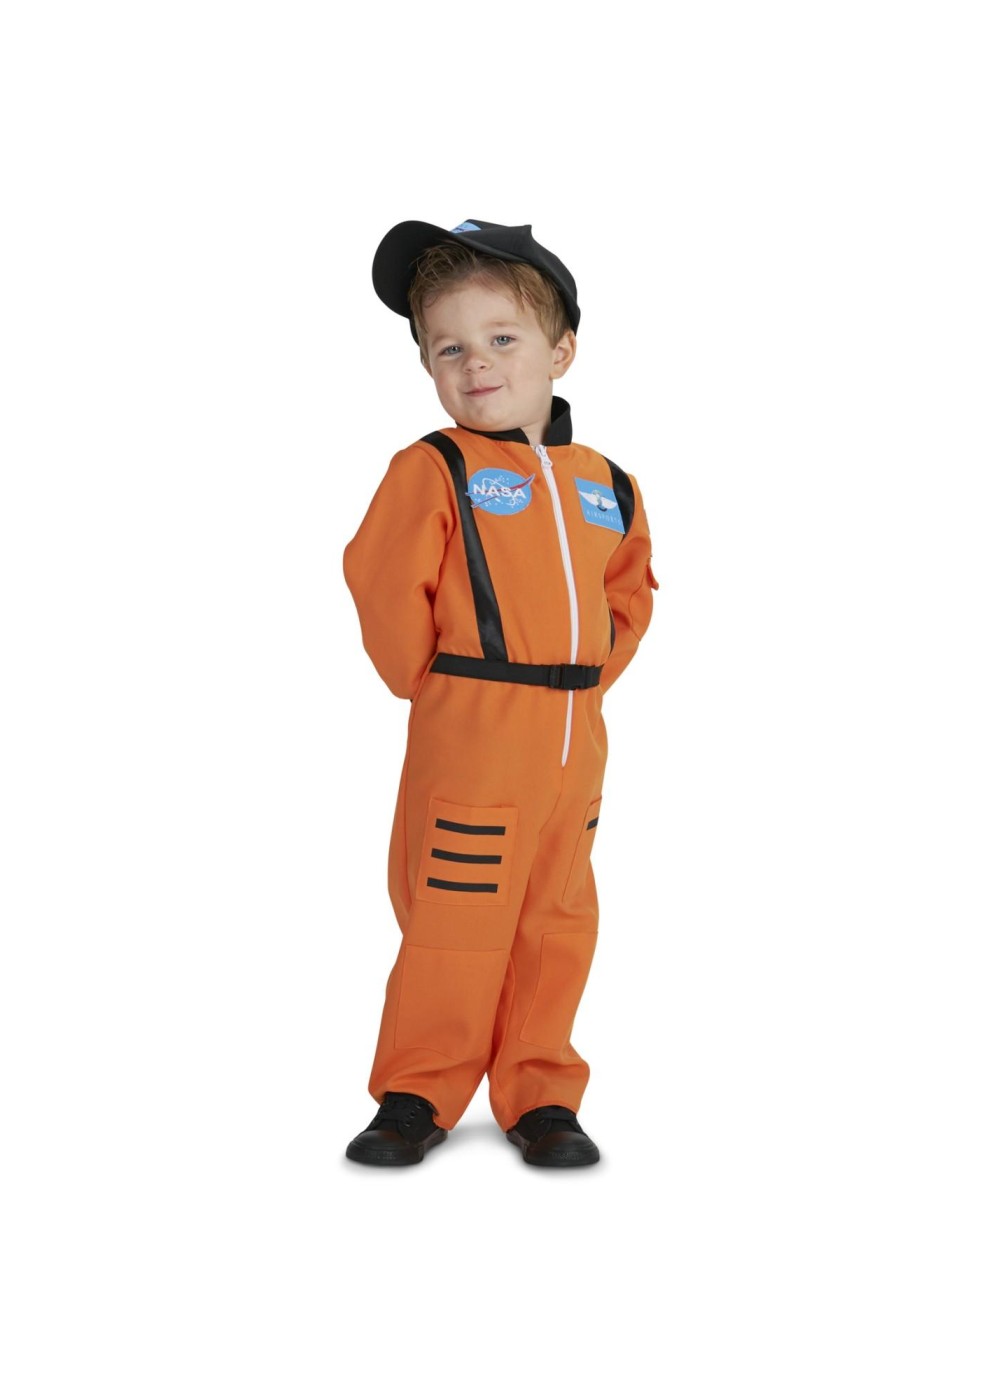 Nasa Astronaut Toddler Boys Costume